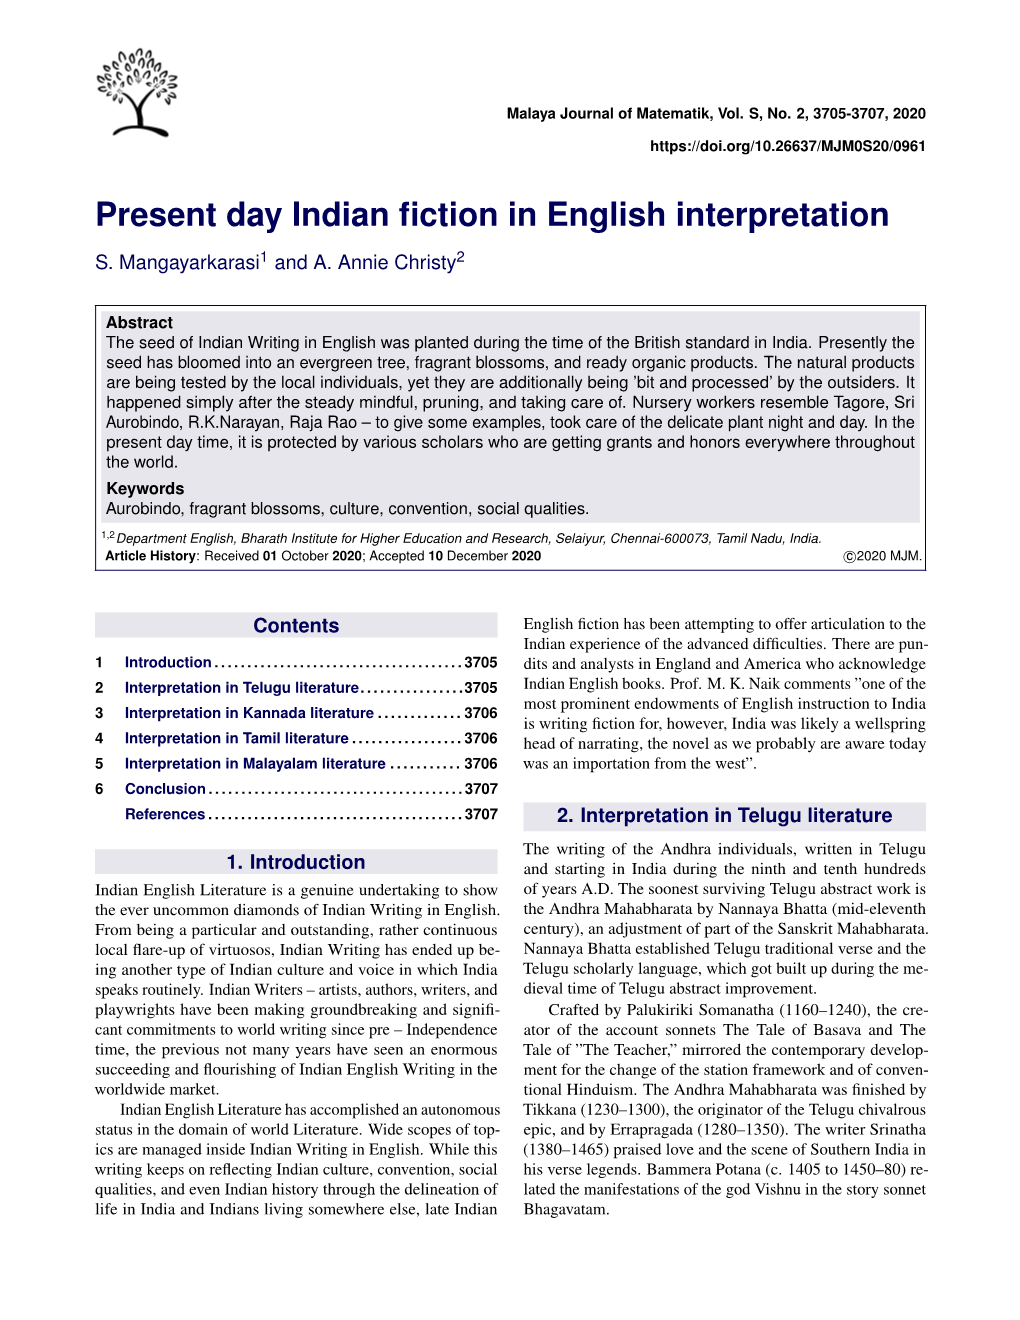 Present Day Indian Fiction in English Interpretation